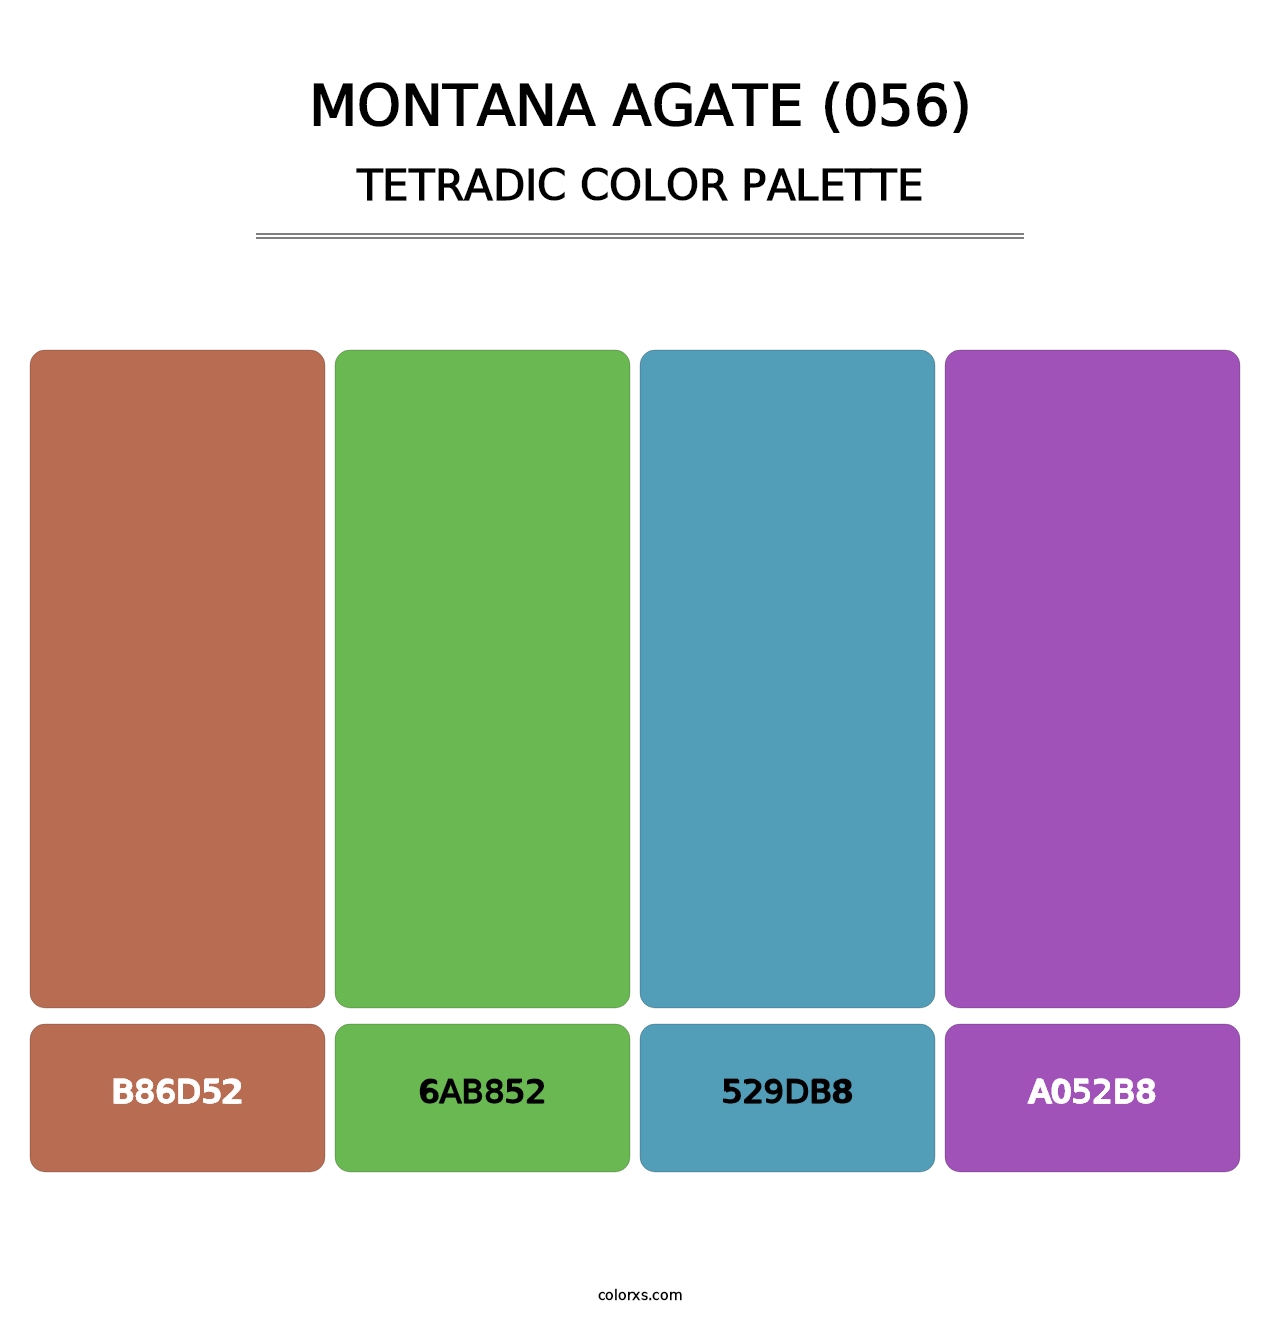 Montana Agate (056) - Tetradic Color Palette